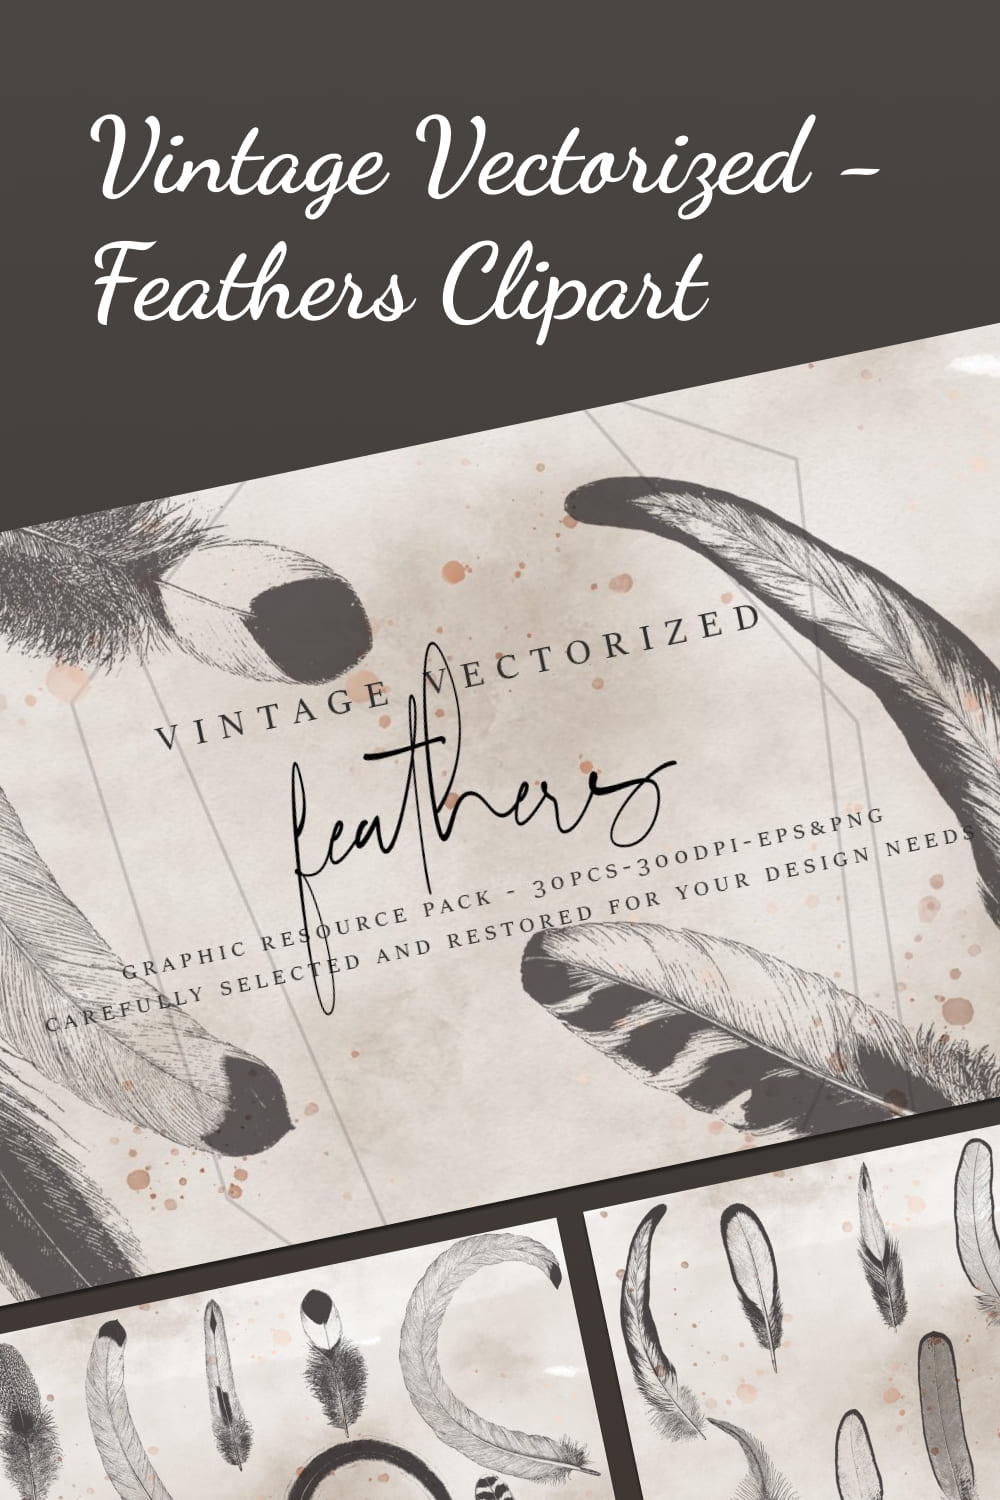 Vintage Vectorized - Feathers Clipart pinterest image.